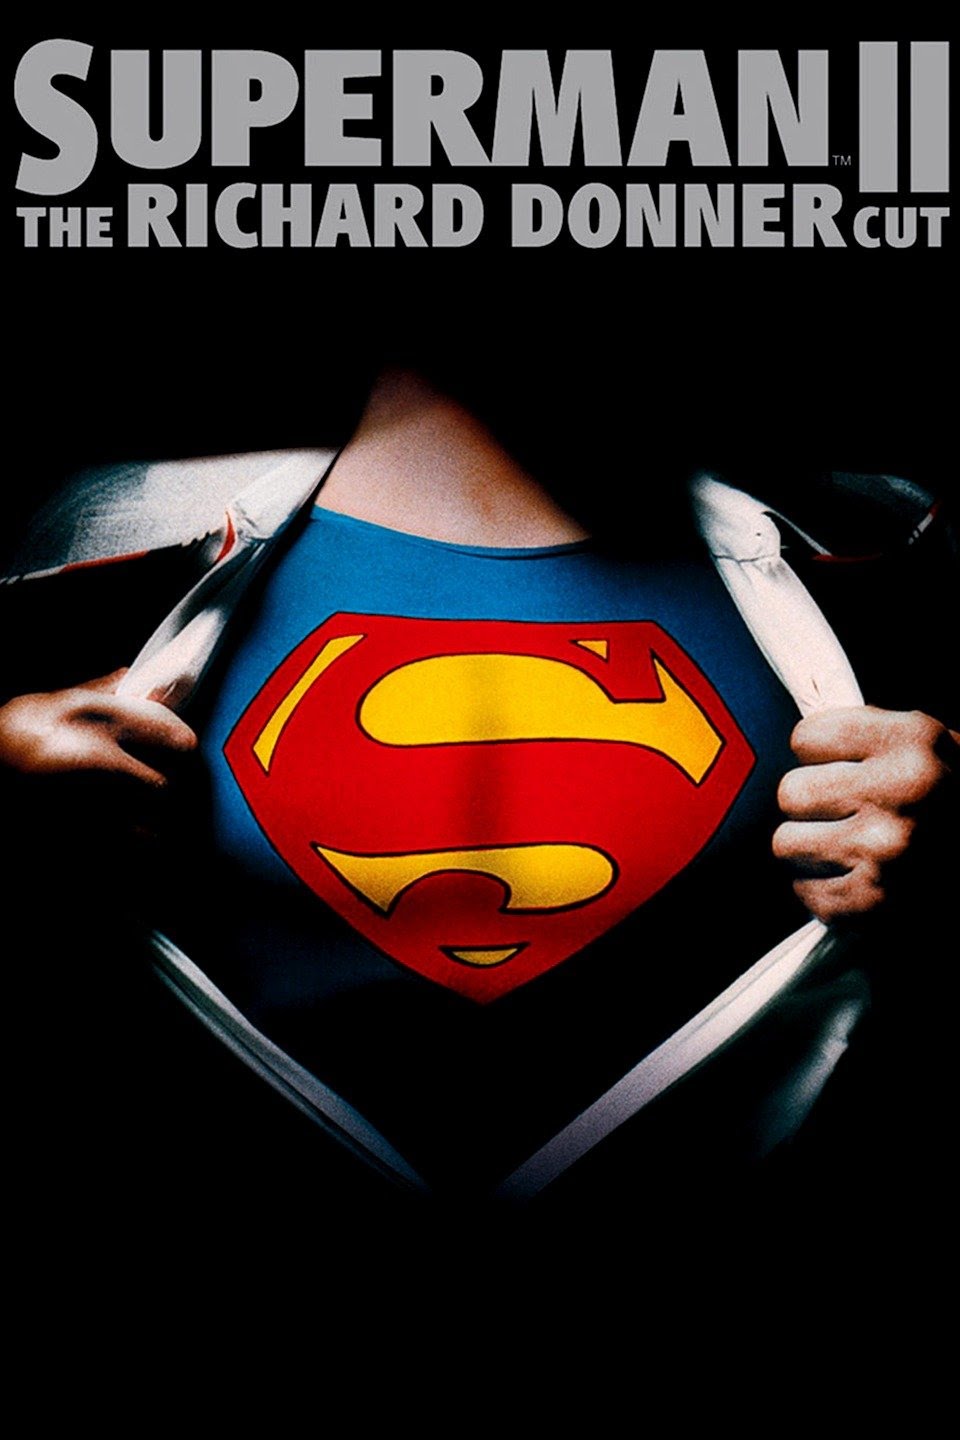 [MINI-HD] Superman II: The Richard Donner Cut (2006) ซูเปอร์แมน II ภาค 2 [1080p] [พากย์ไทย 5.1 + เสียงอังกฤษ DTS] [บรรยายไทย + อังกฤษ] [เสียงไทย + ซับไทย] [DOSYAUPLOAD]